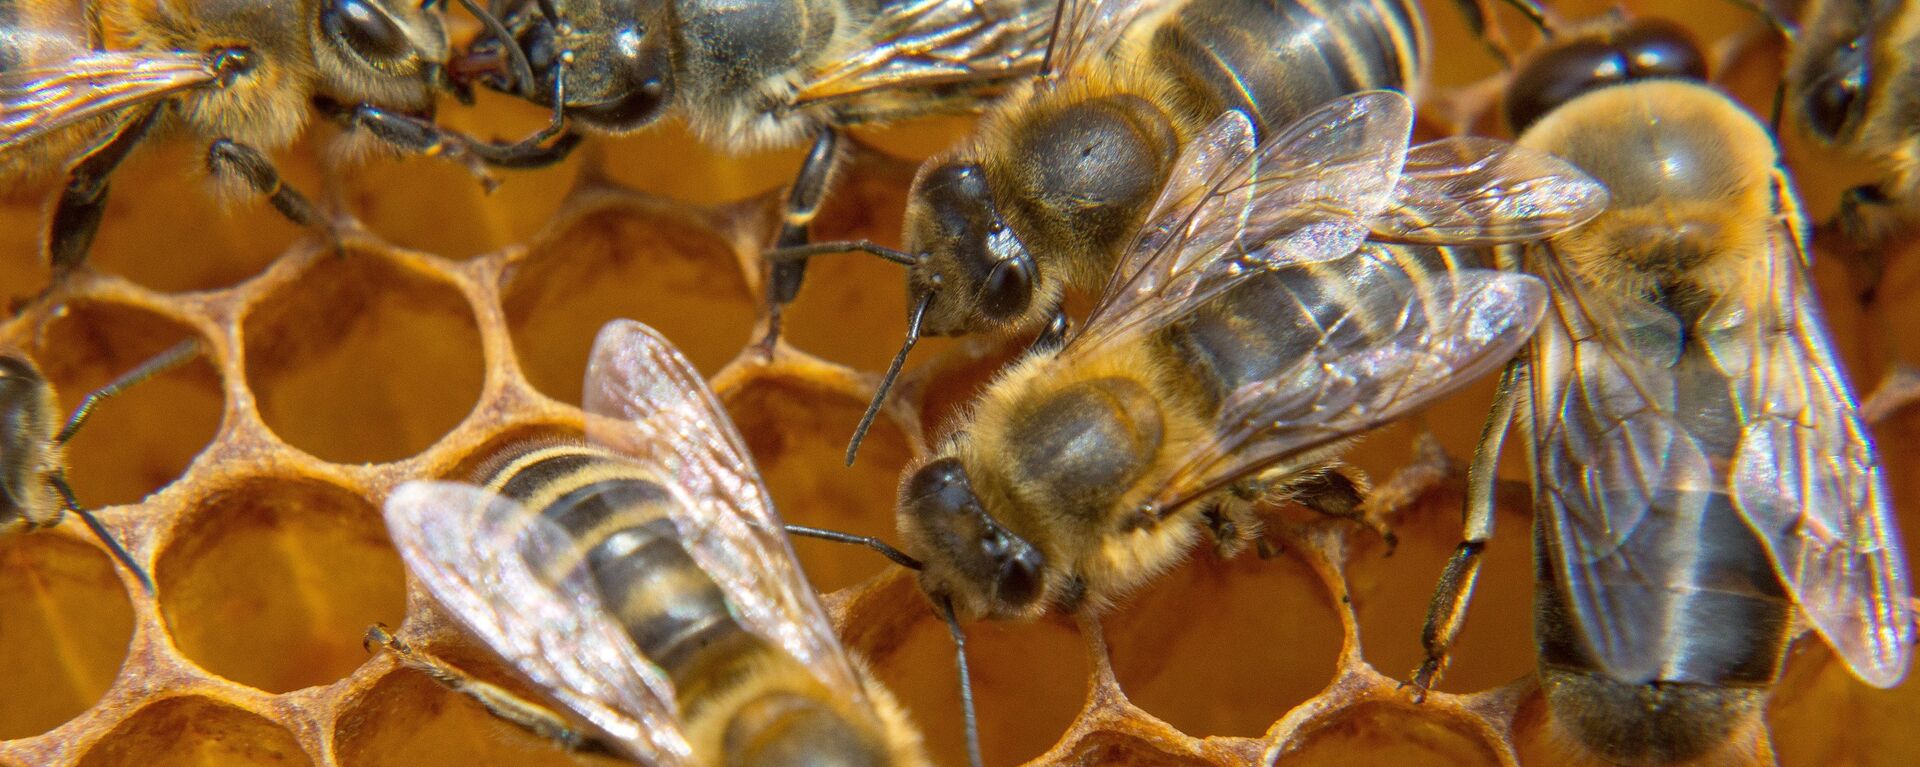 Una colmena de abejas (imagen referencial) - Sputnik Mundo, 1920, 21.05.2020